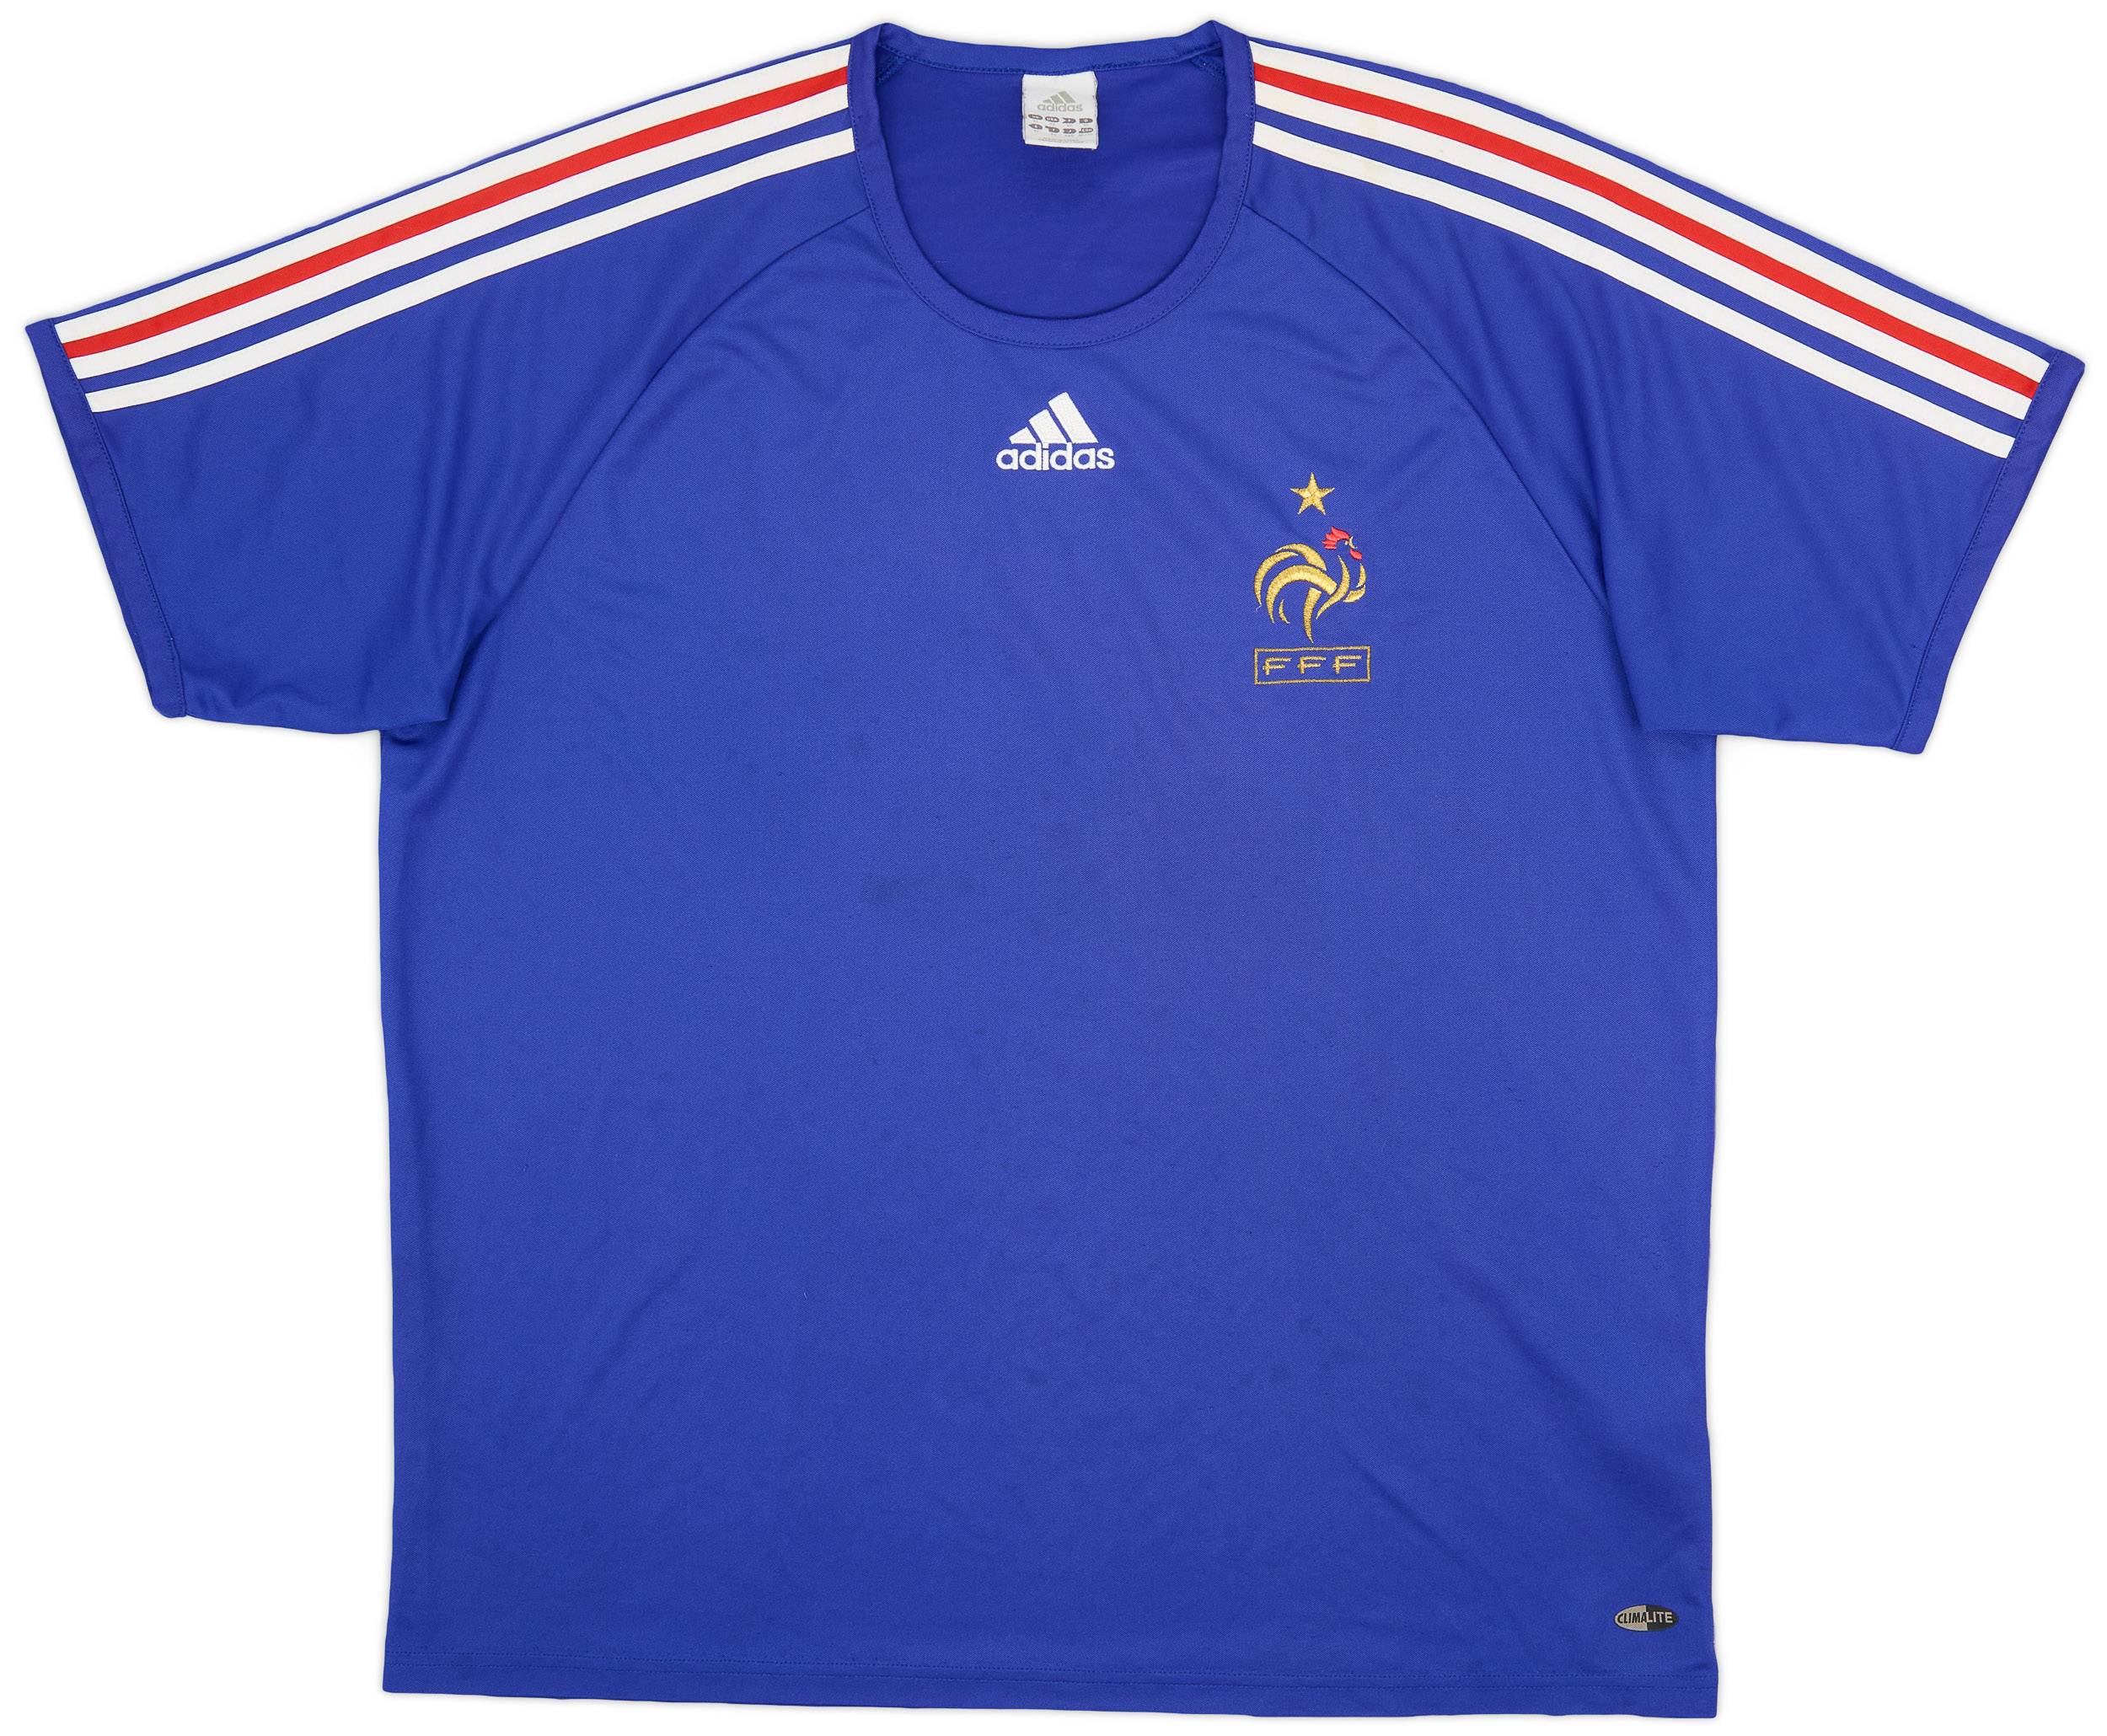 2008-09 France adidas Training Shirt - 9/10 - (XL)